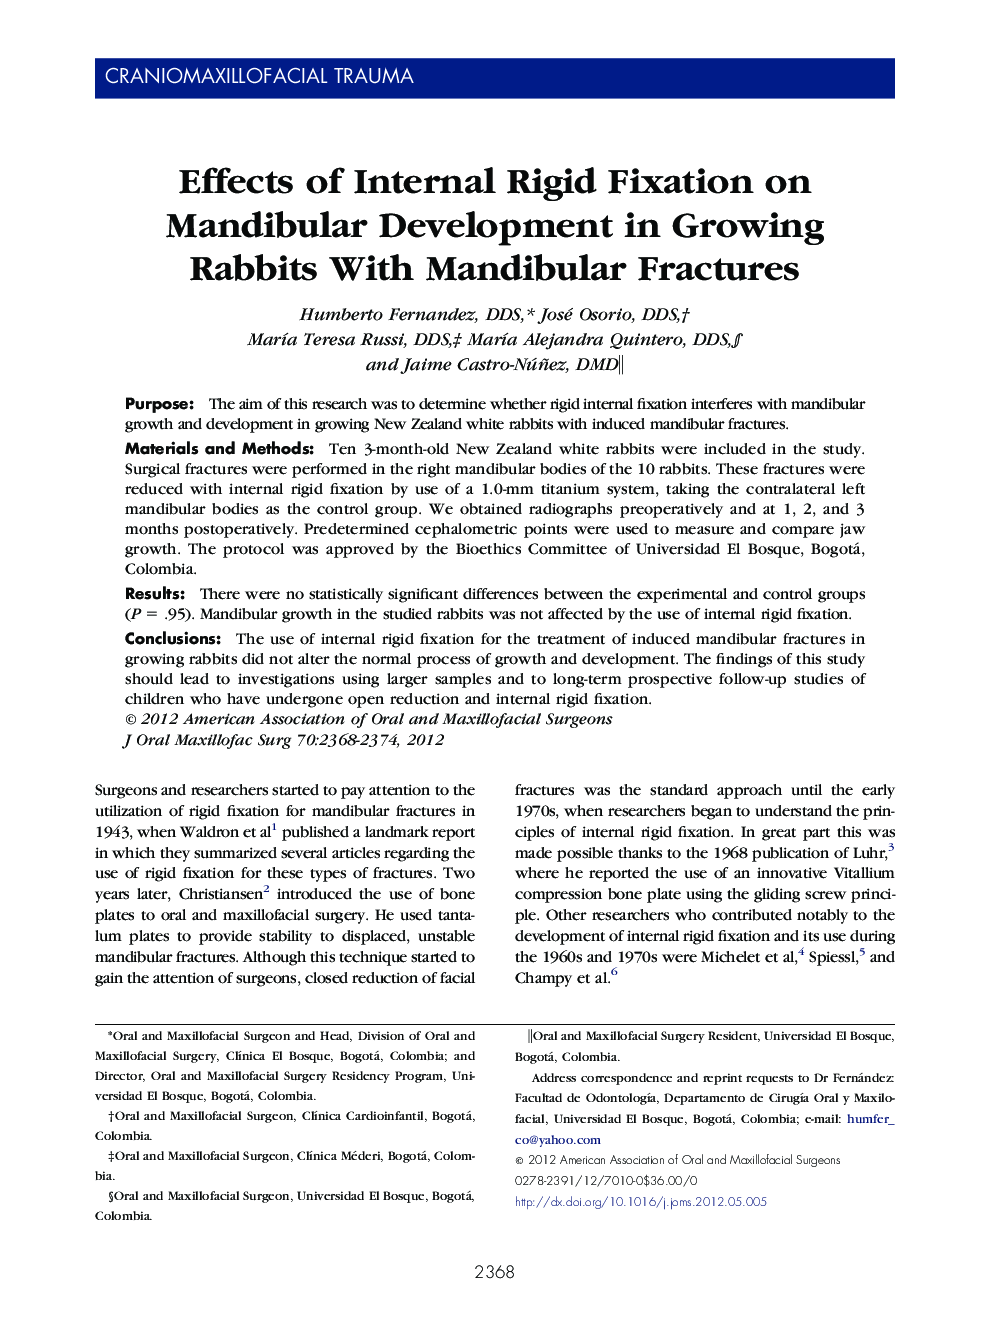 Effects of Internal Rigid Fixation on Mandibular Development in Growing Rabbits With Mandibular Fractures